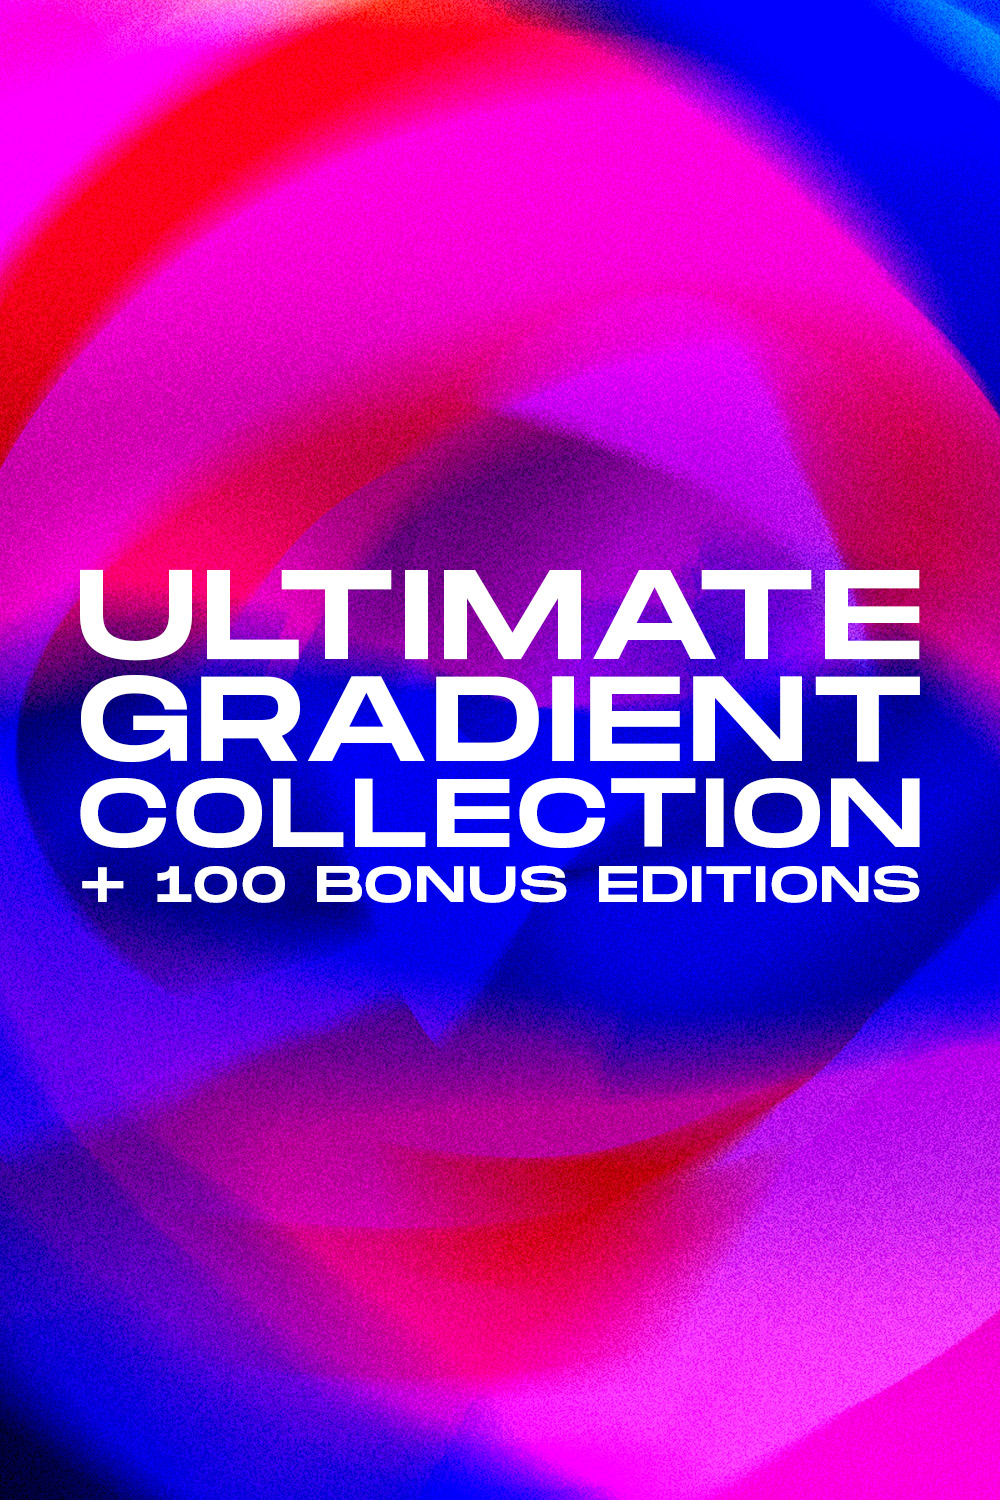 Ultimate Gradient Collection Bundle Pinterest image.